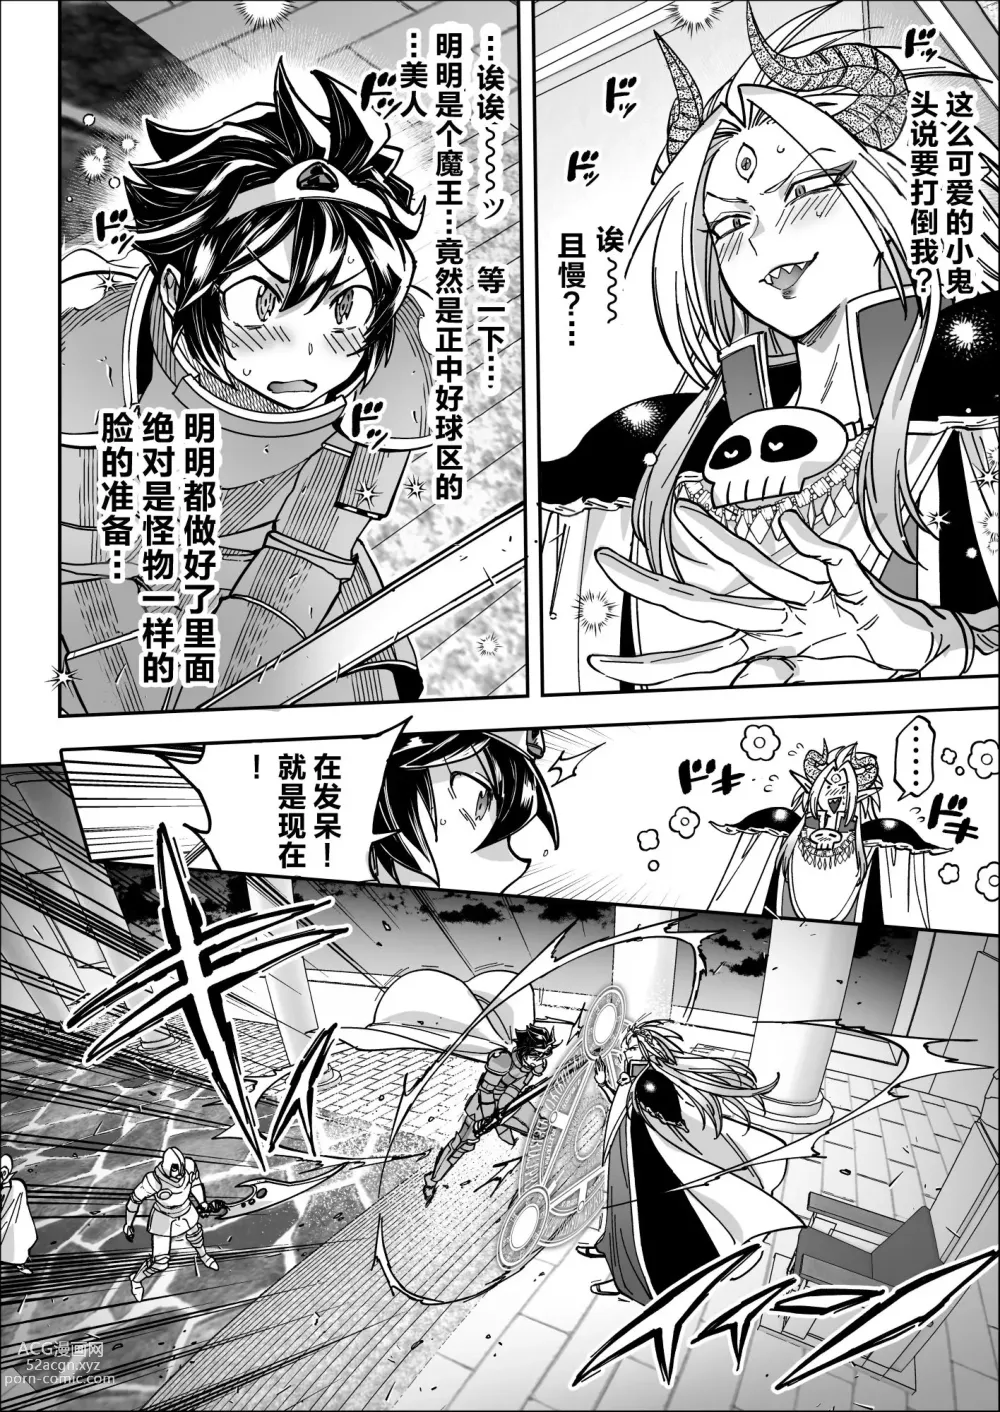 Page 4 of doujinshi 最终决战才见到对方正脸就恍神的勇者与魔王